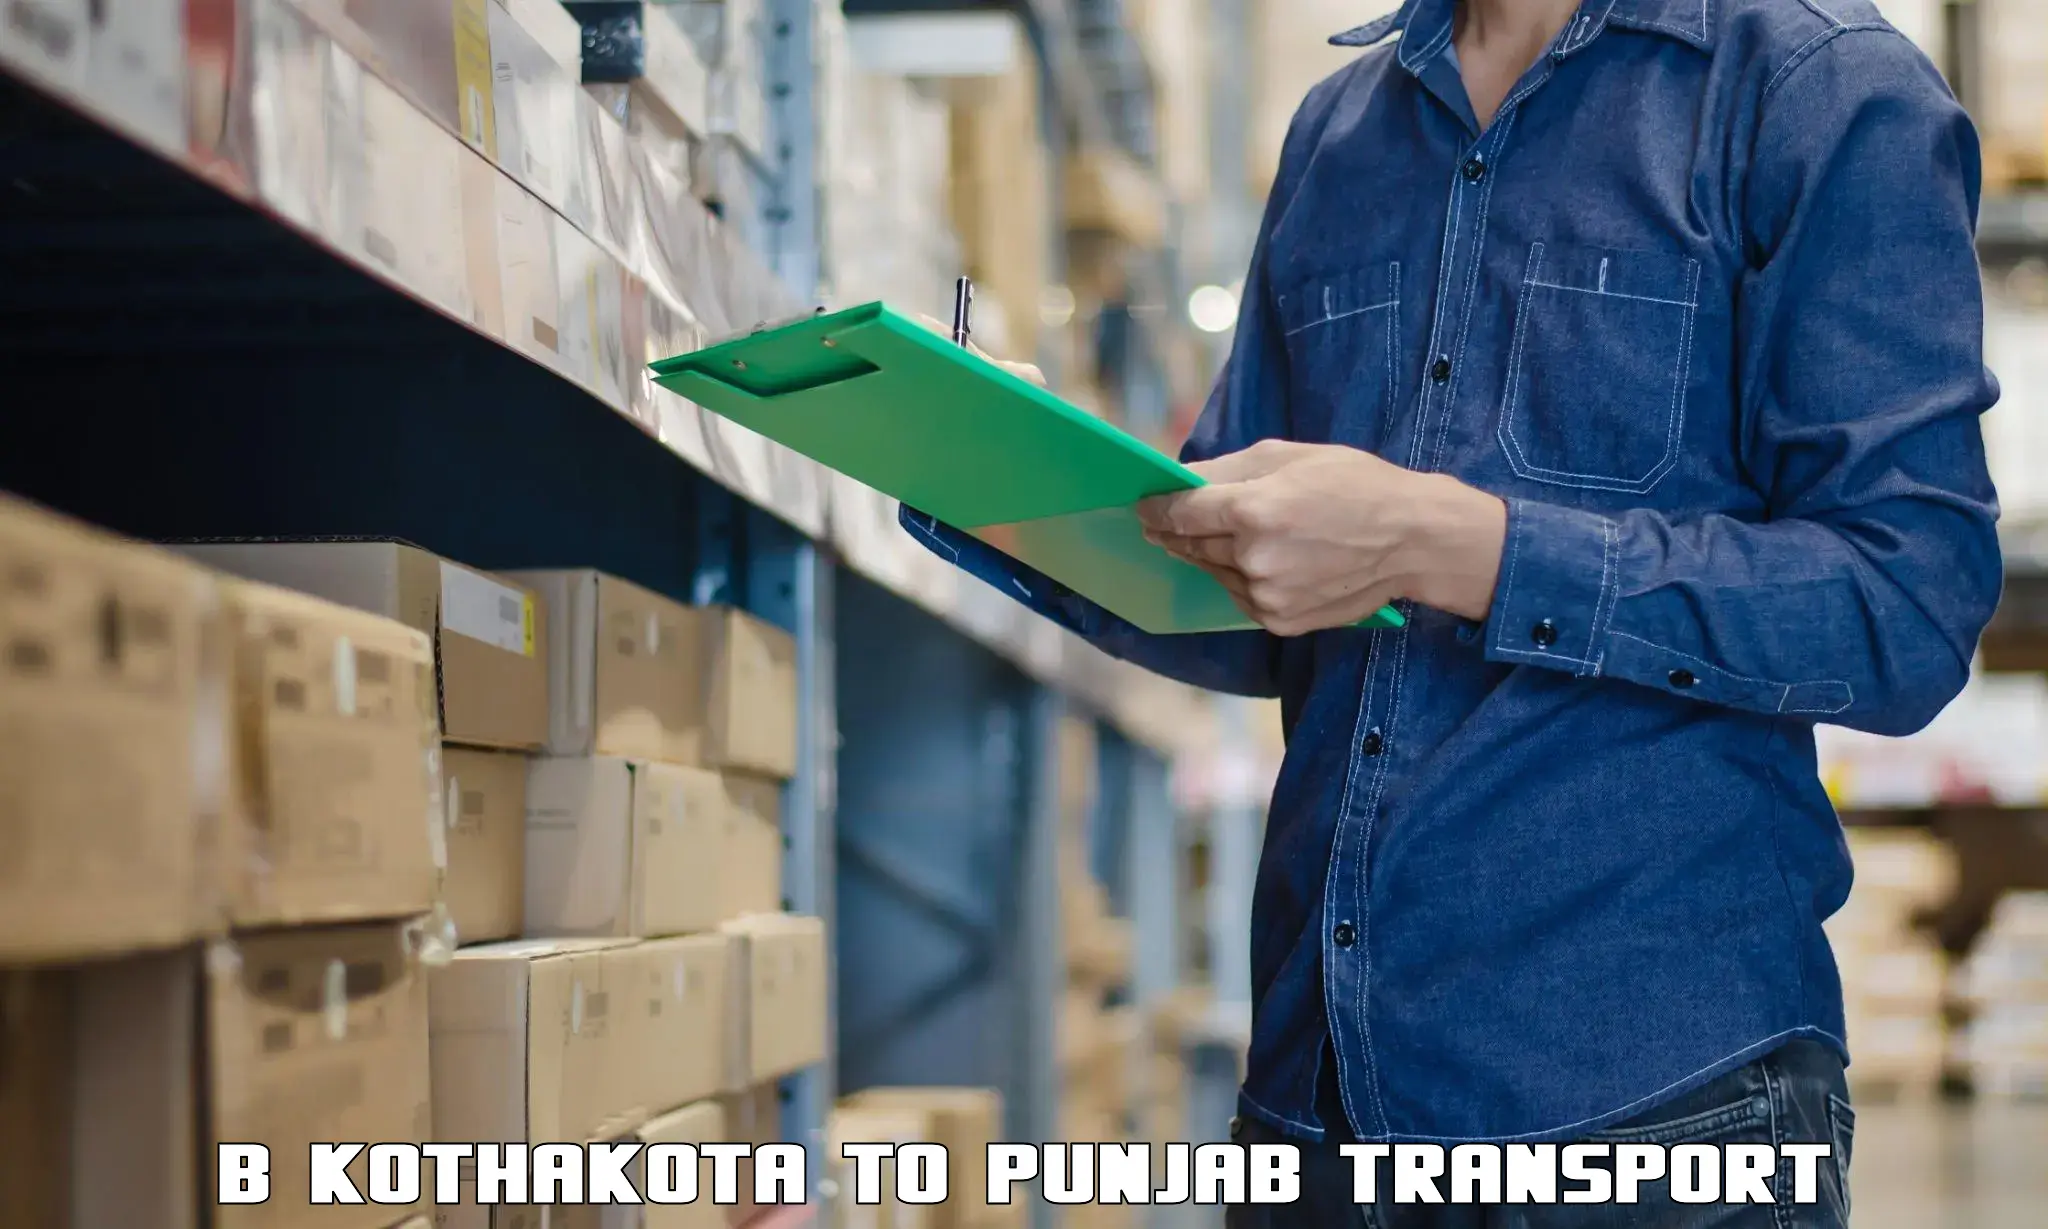 Parcel transport services B Kothakota to Zirakpur